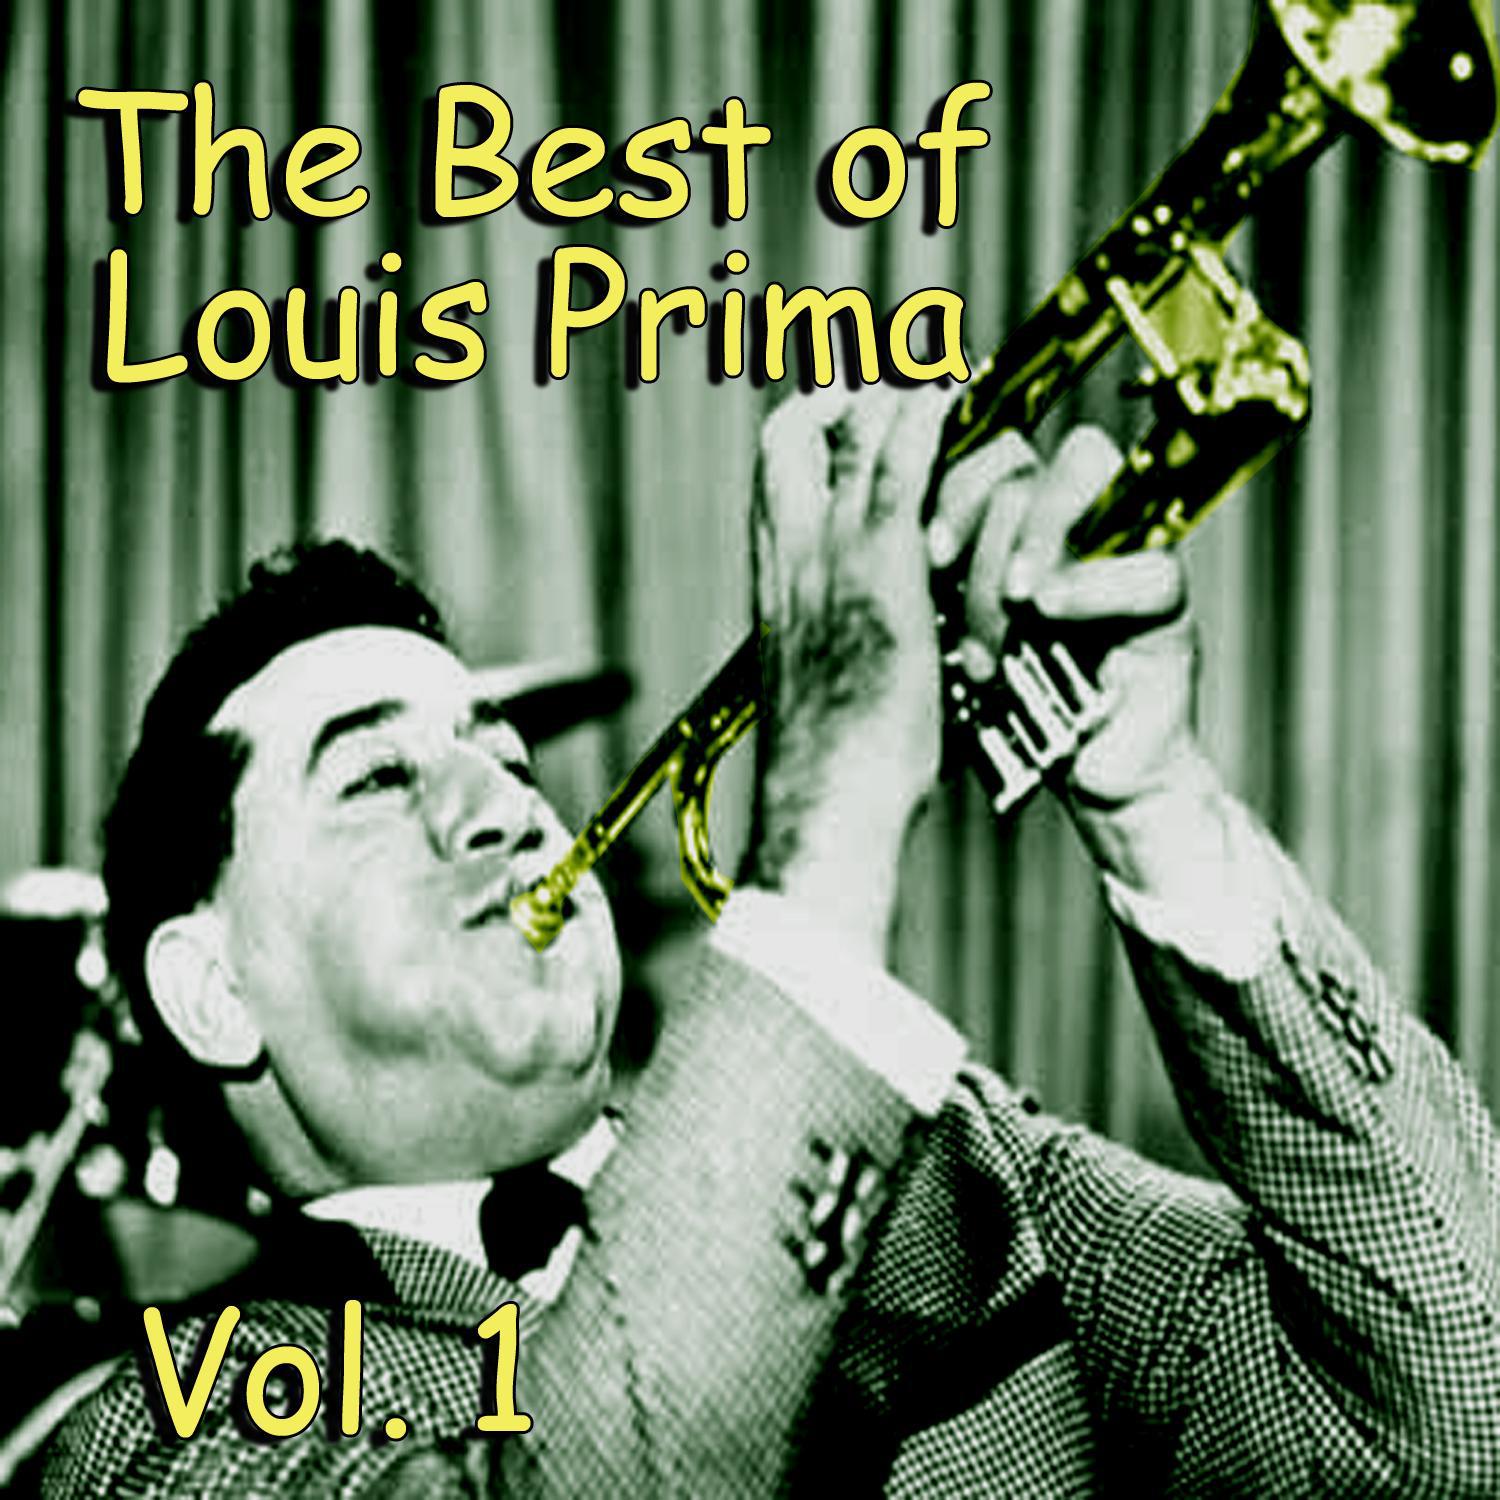 The Best of Louis Prima, Vol. 1